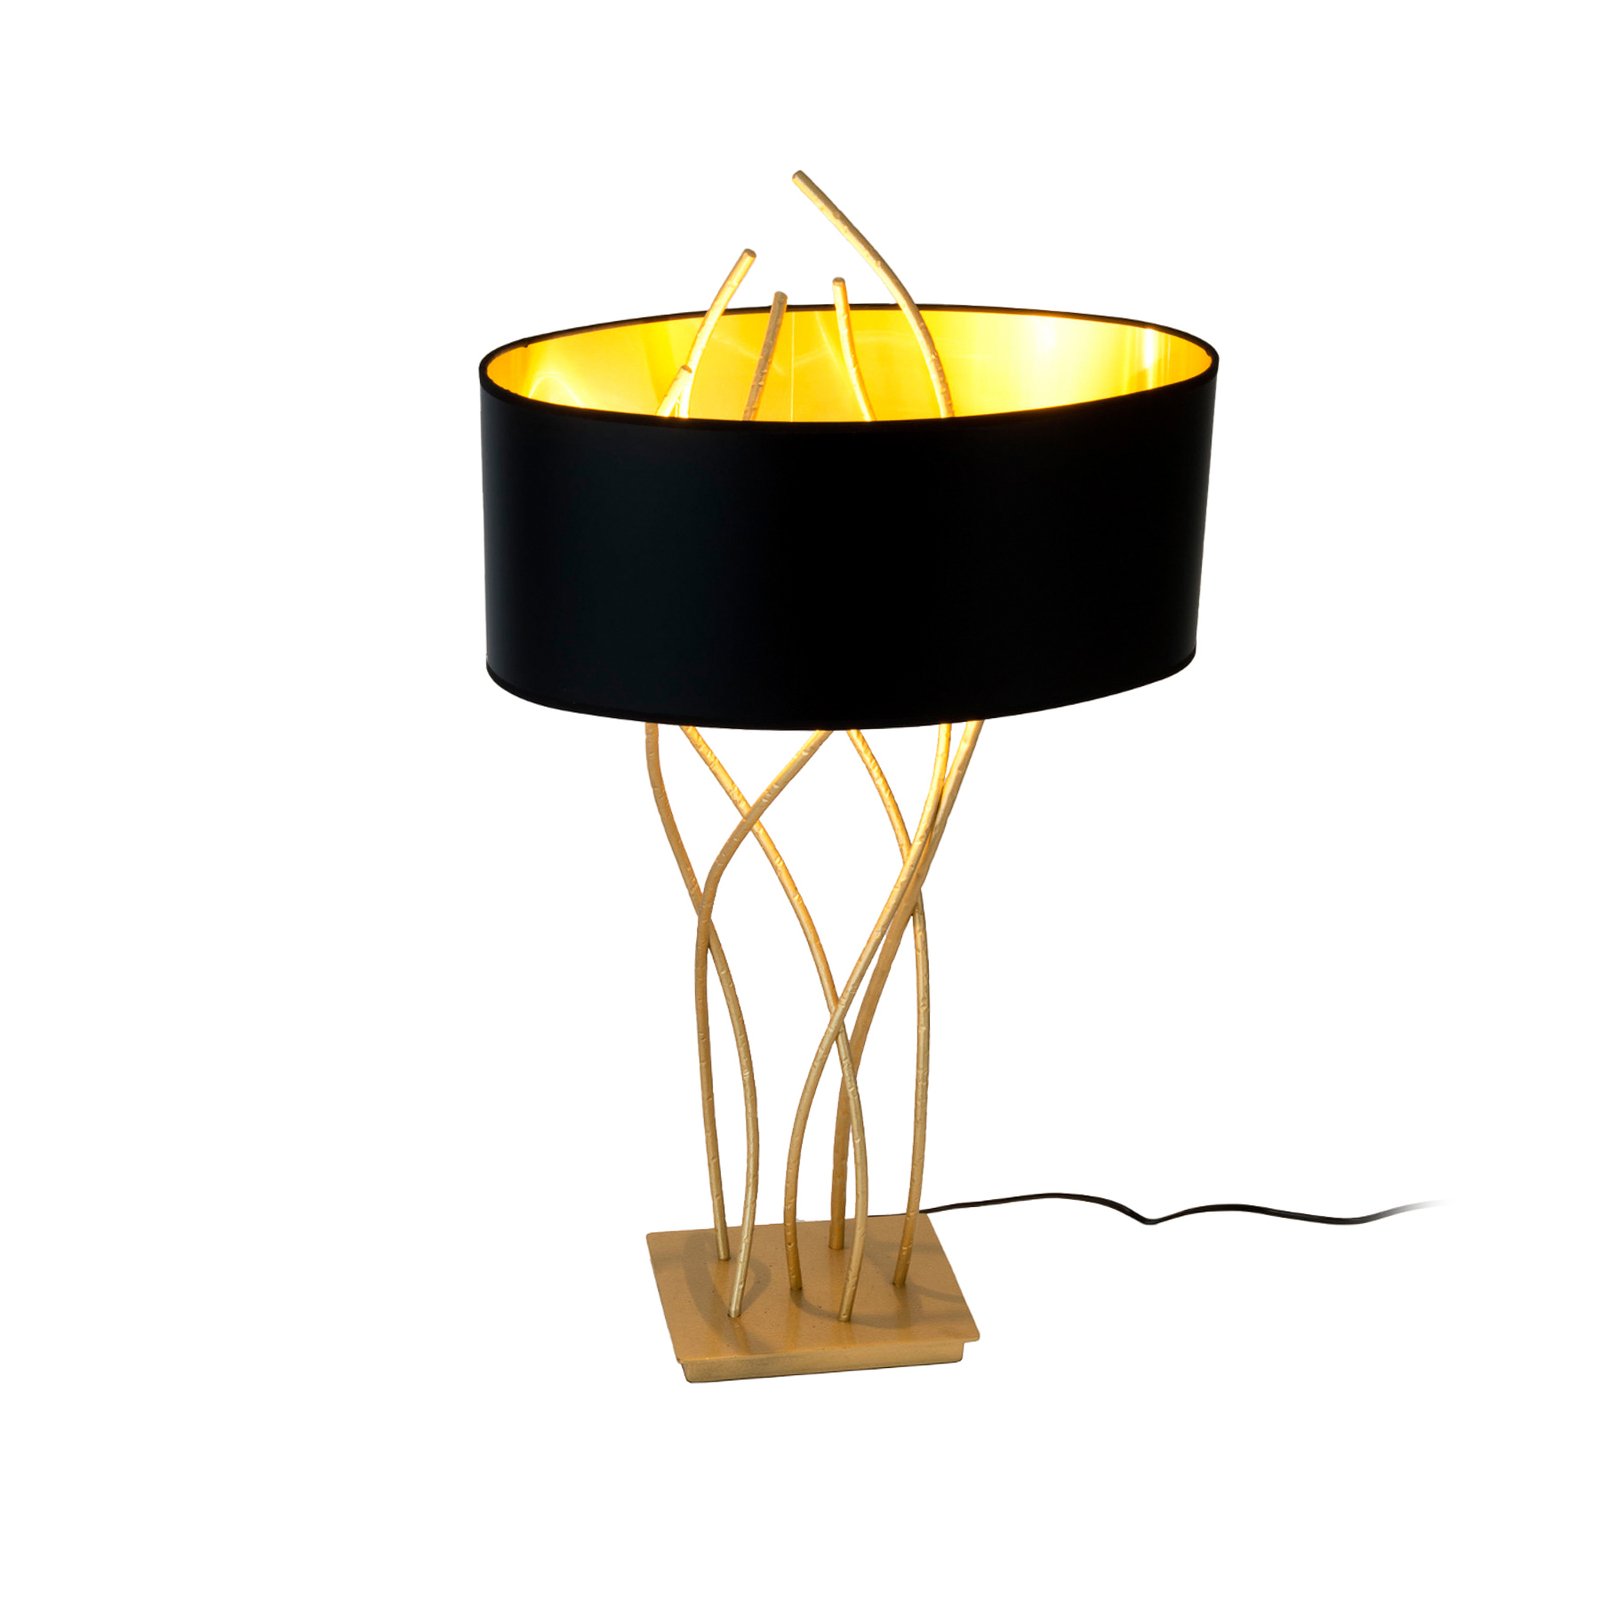 Lampe à poser Elba ovale, or/noir, hauteur 75 cm, fer